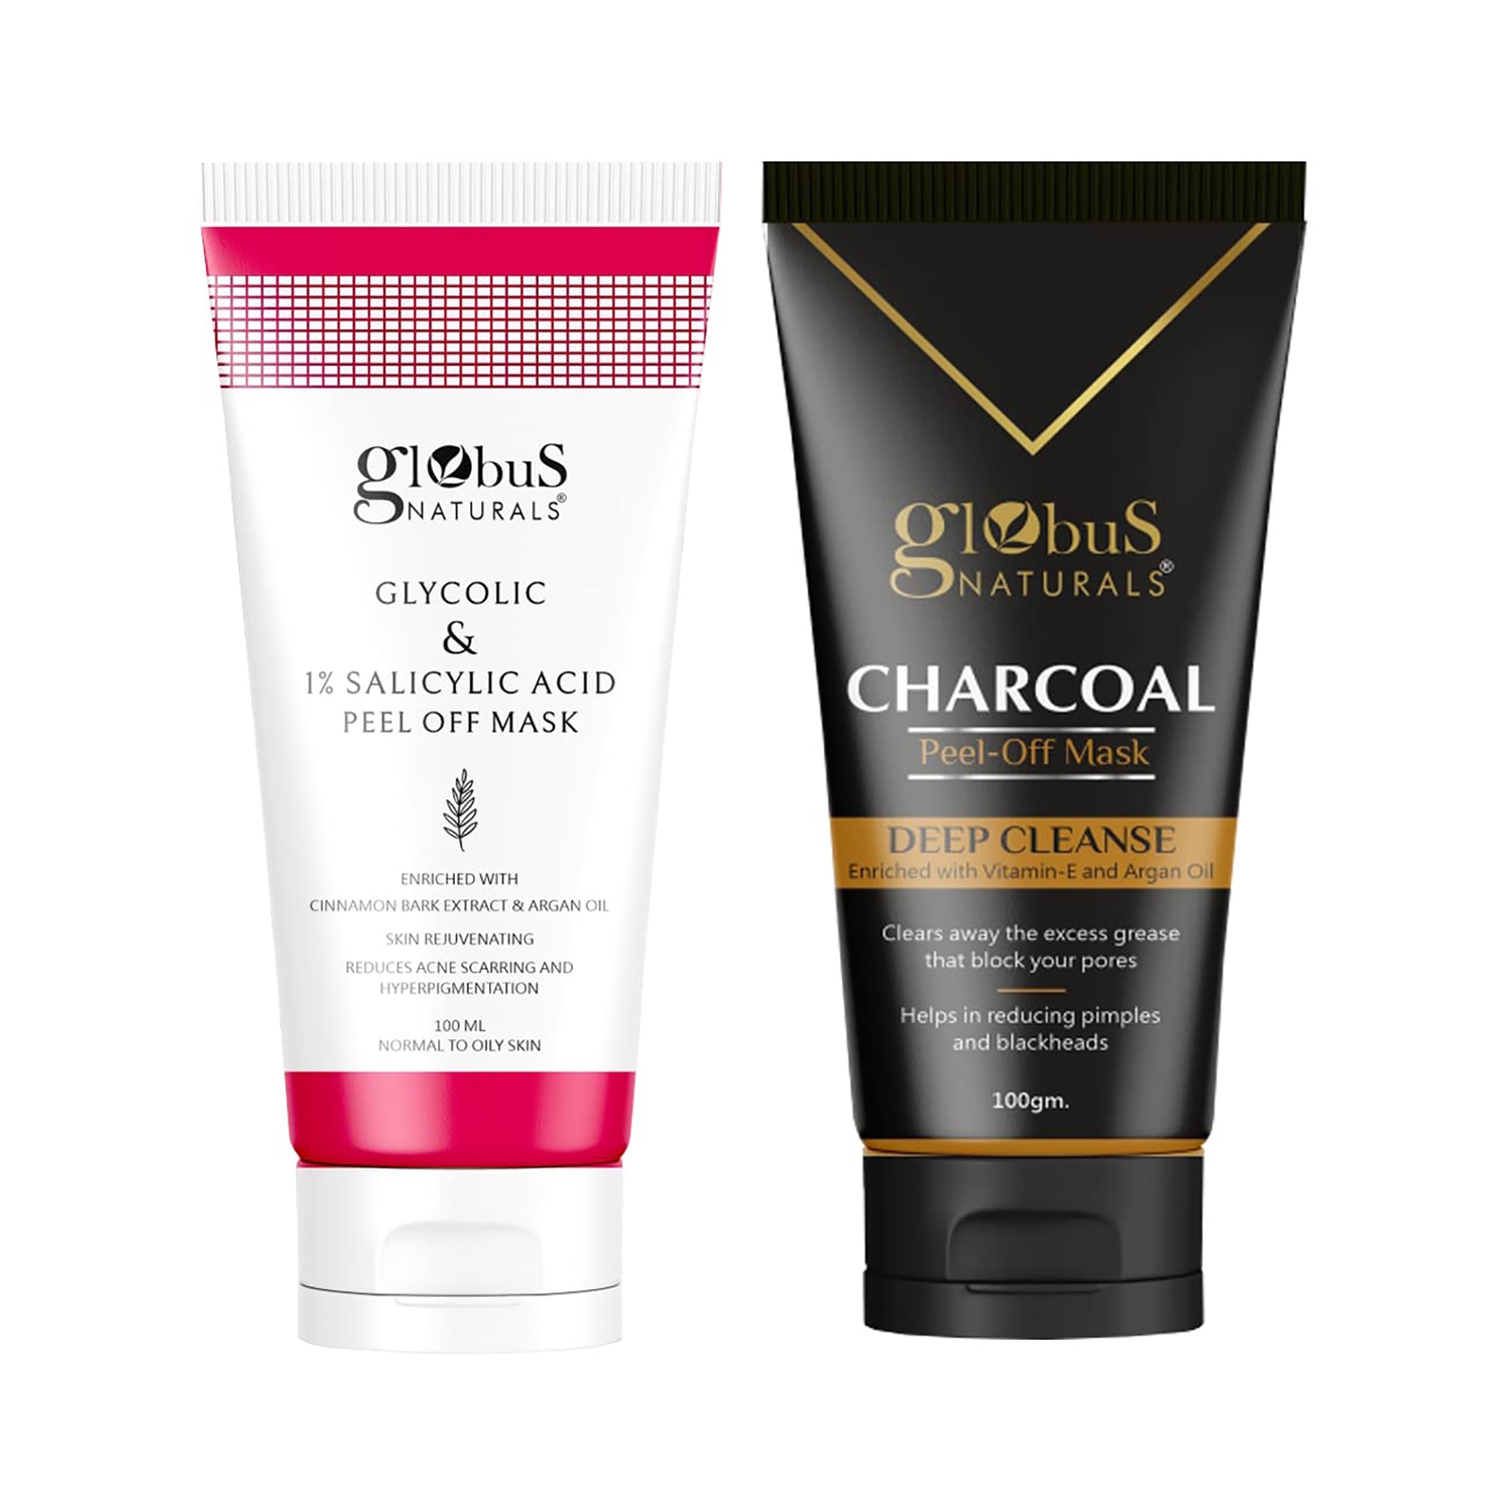 Globus Naturals | Globus Naturals Deep Cleanse Charcoal & Glycolic & 1% Salicylic Acid Peel Off Mask Combo ( Men) (2pc)